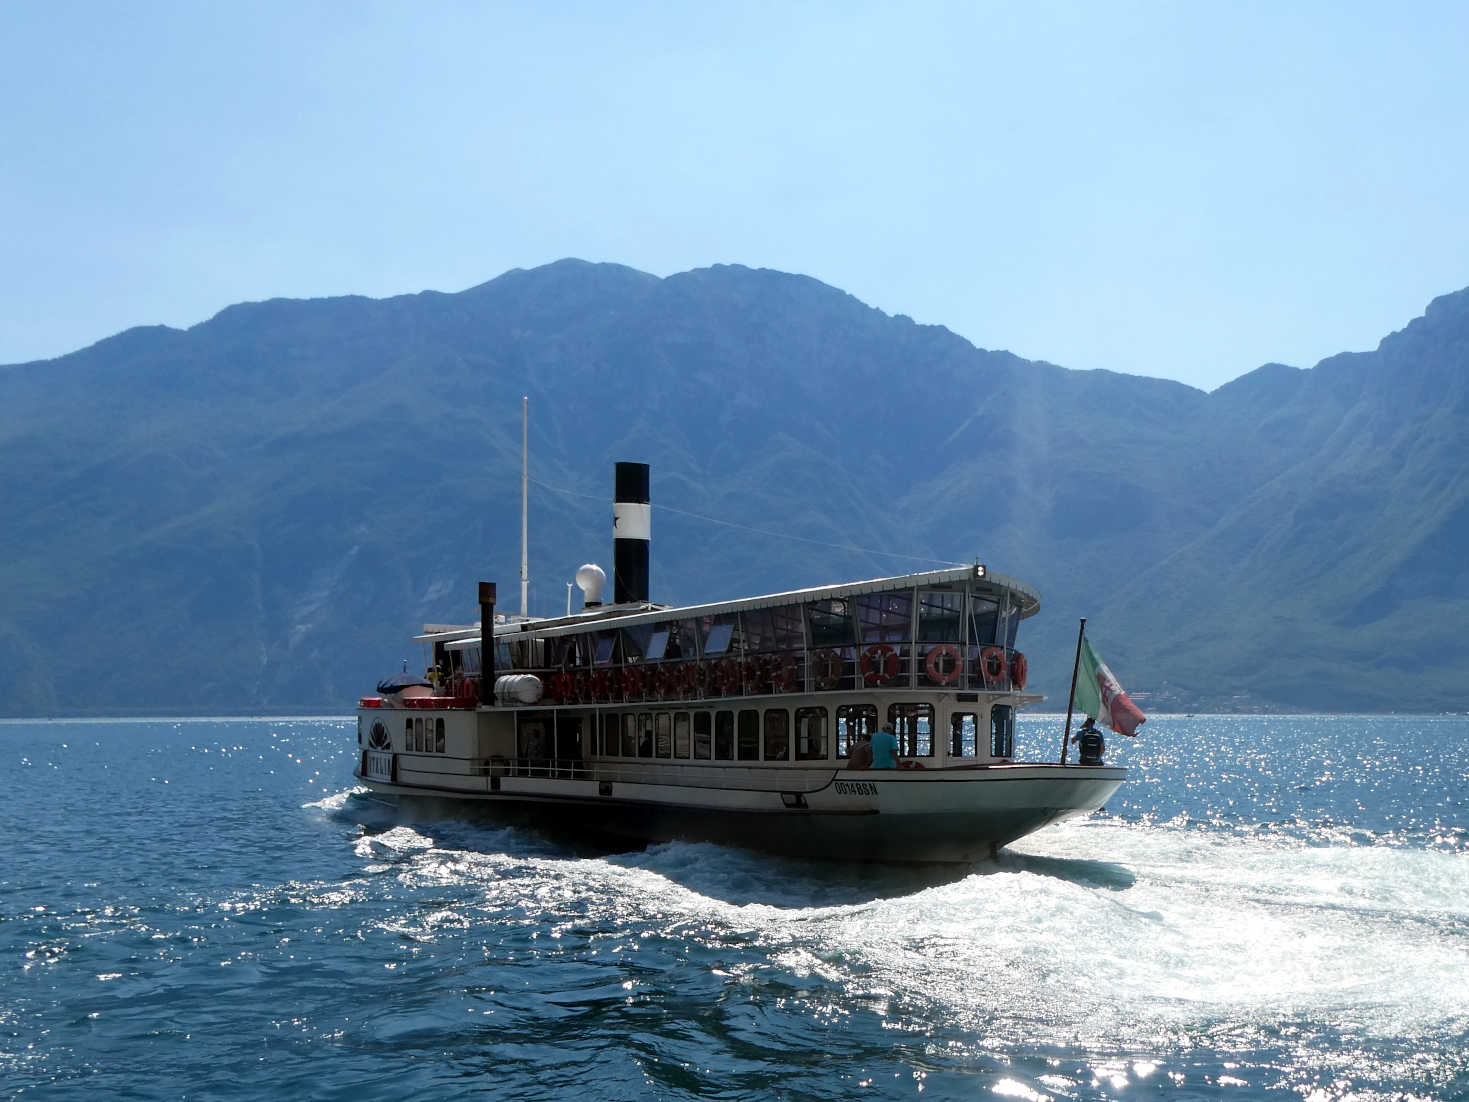 The Italia leaving Limone Lake Garda